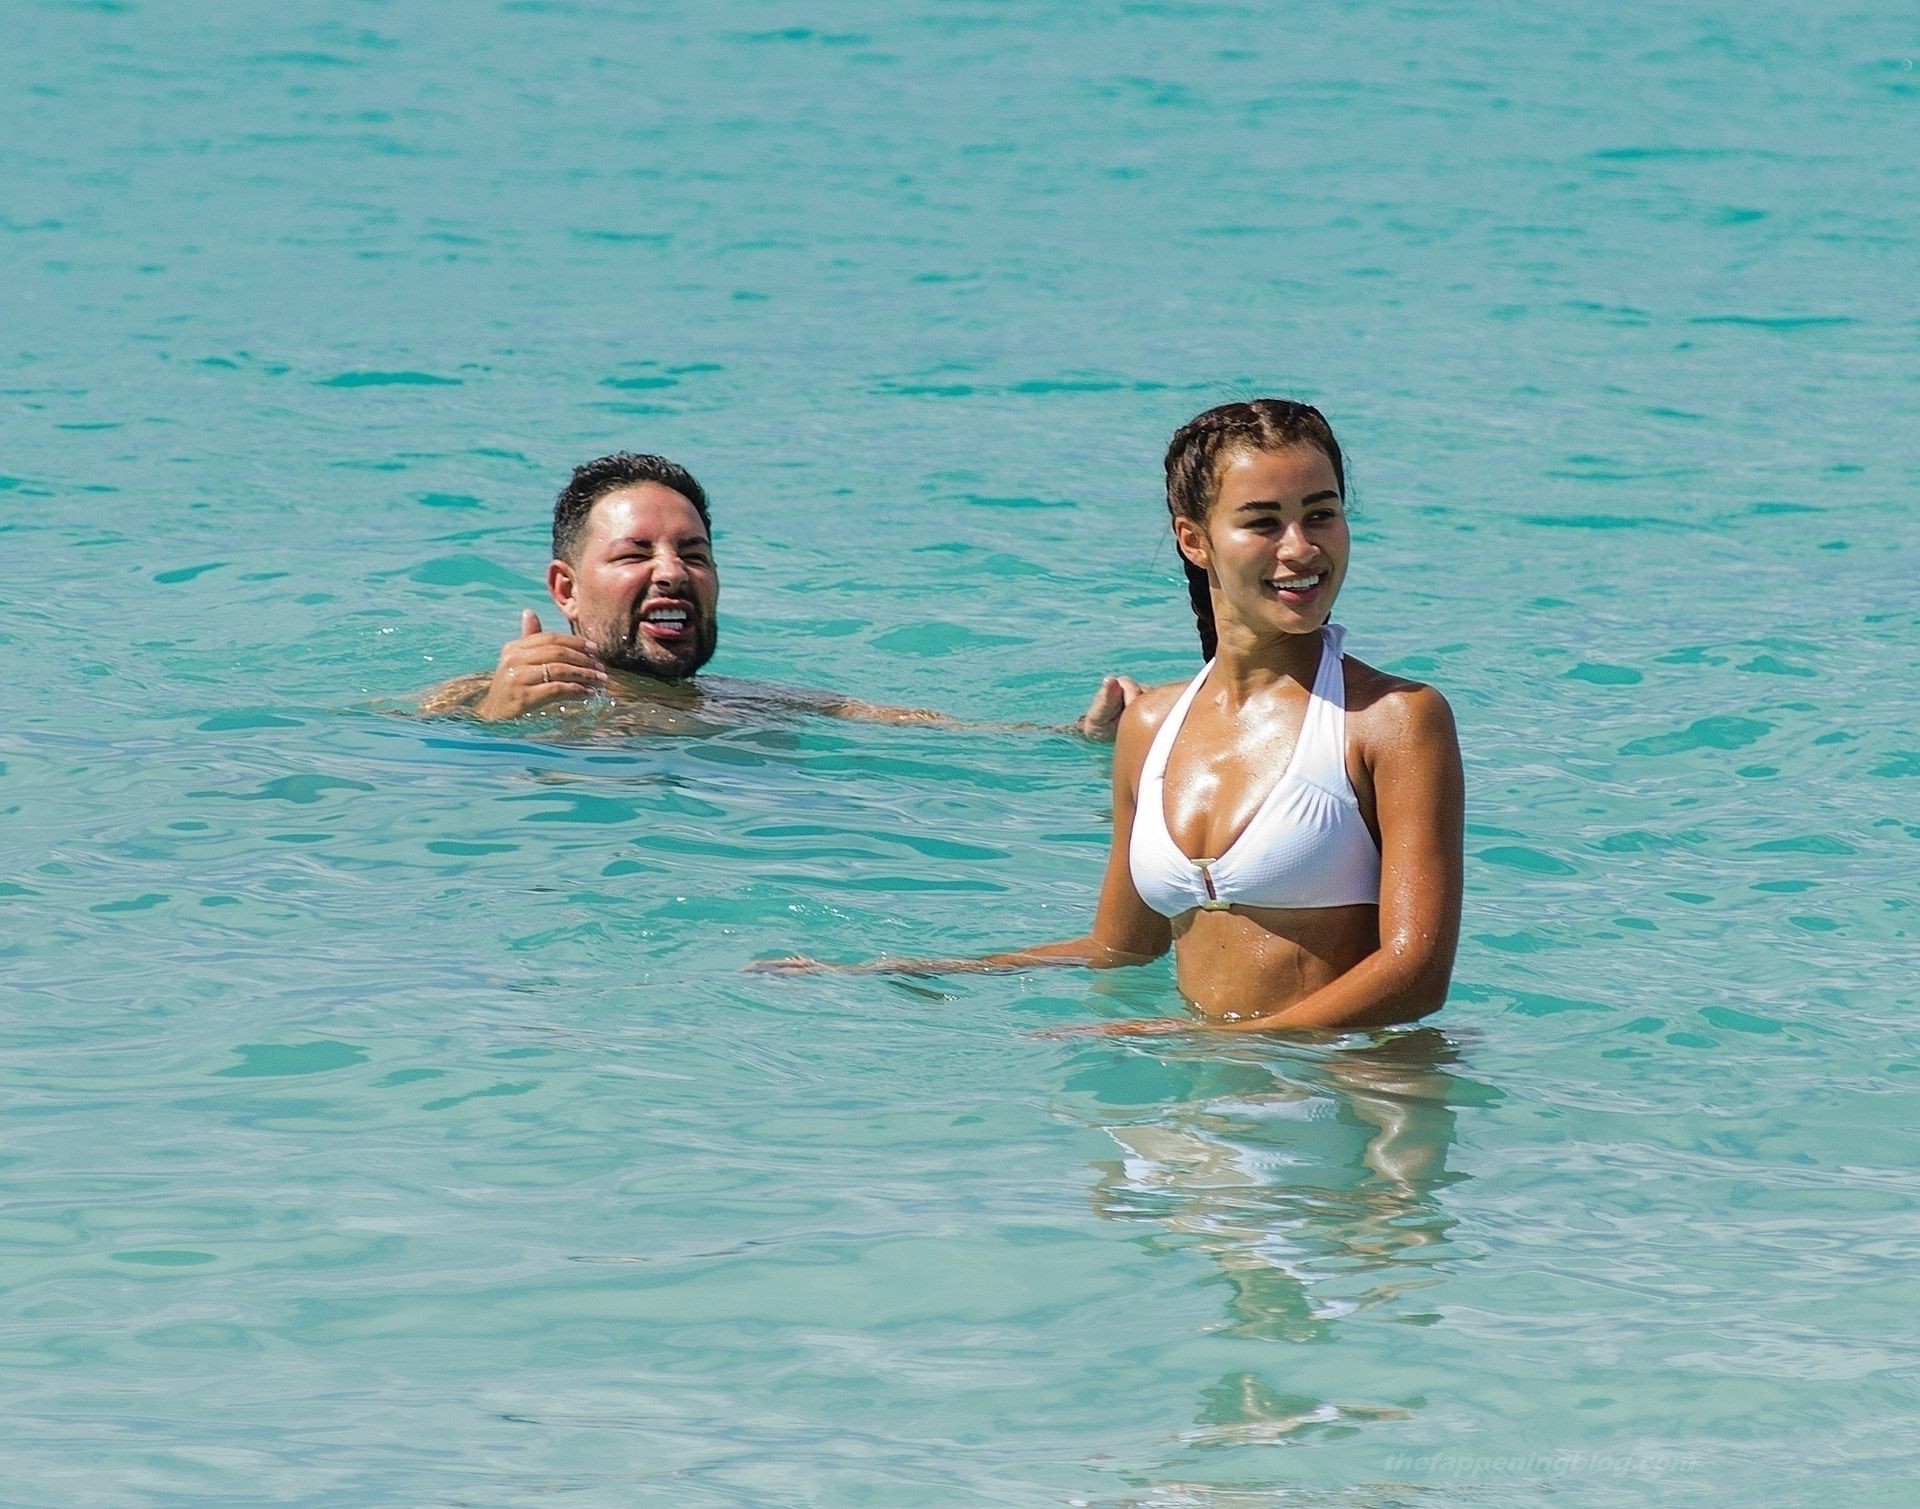 Montana Brown Dons Her Sexy Bikini on the Golden Sandy Beaches of Barbados (68 Photos)